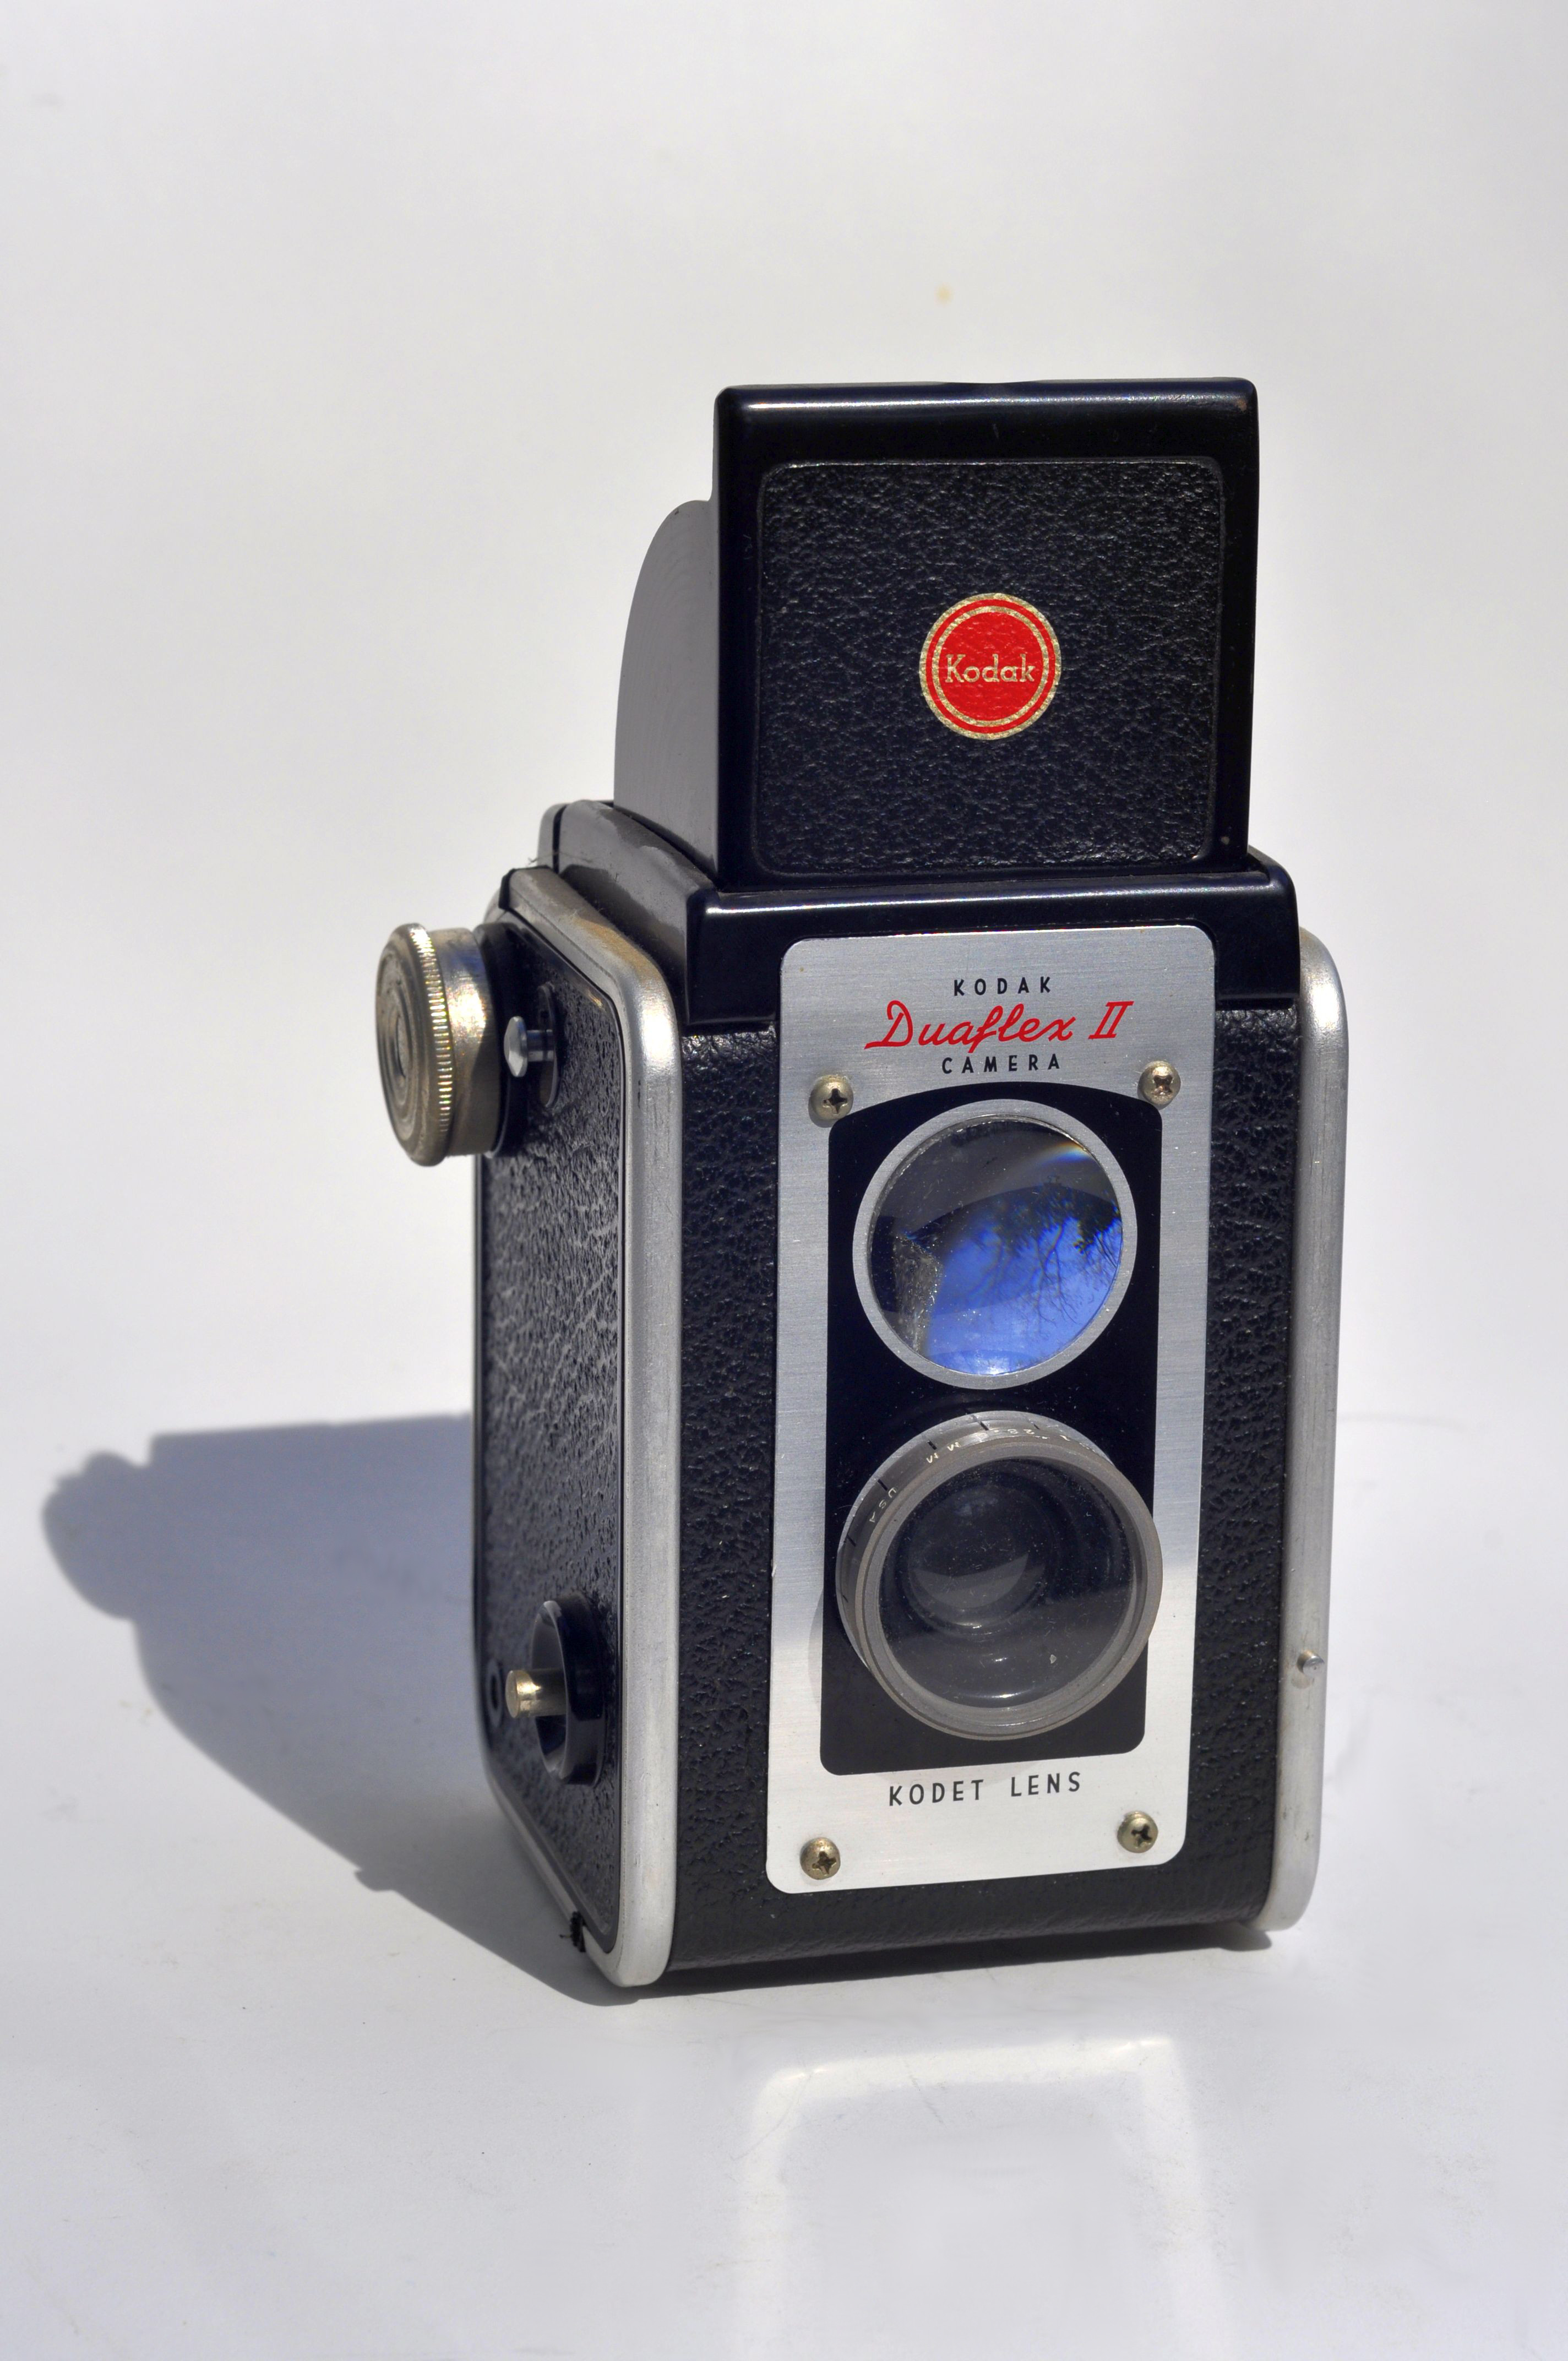 Kodak Duaflex II camera - 1